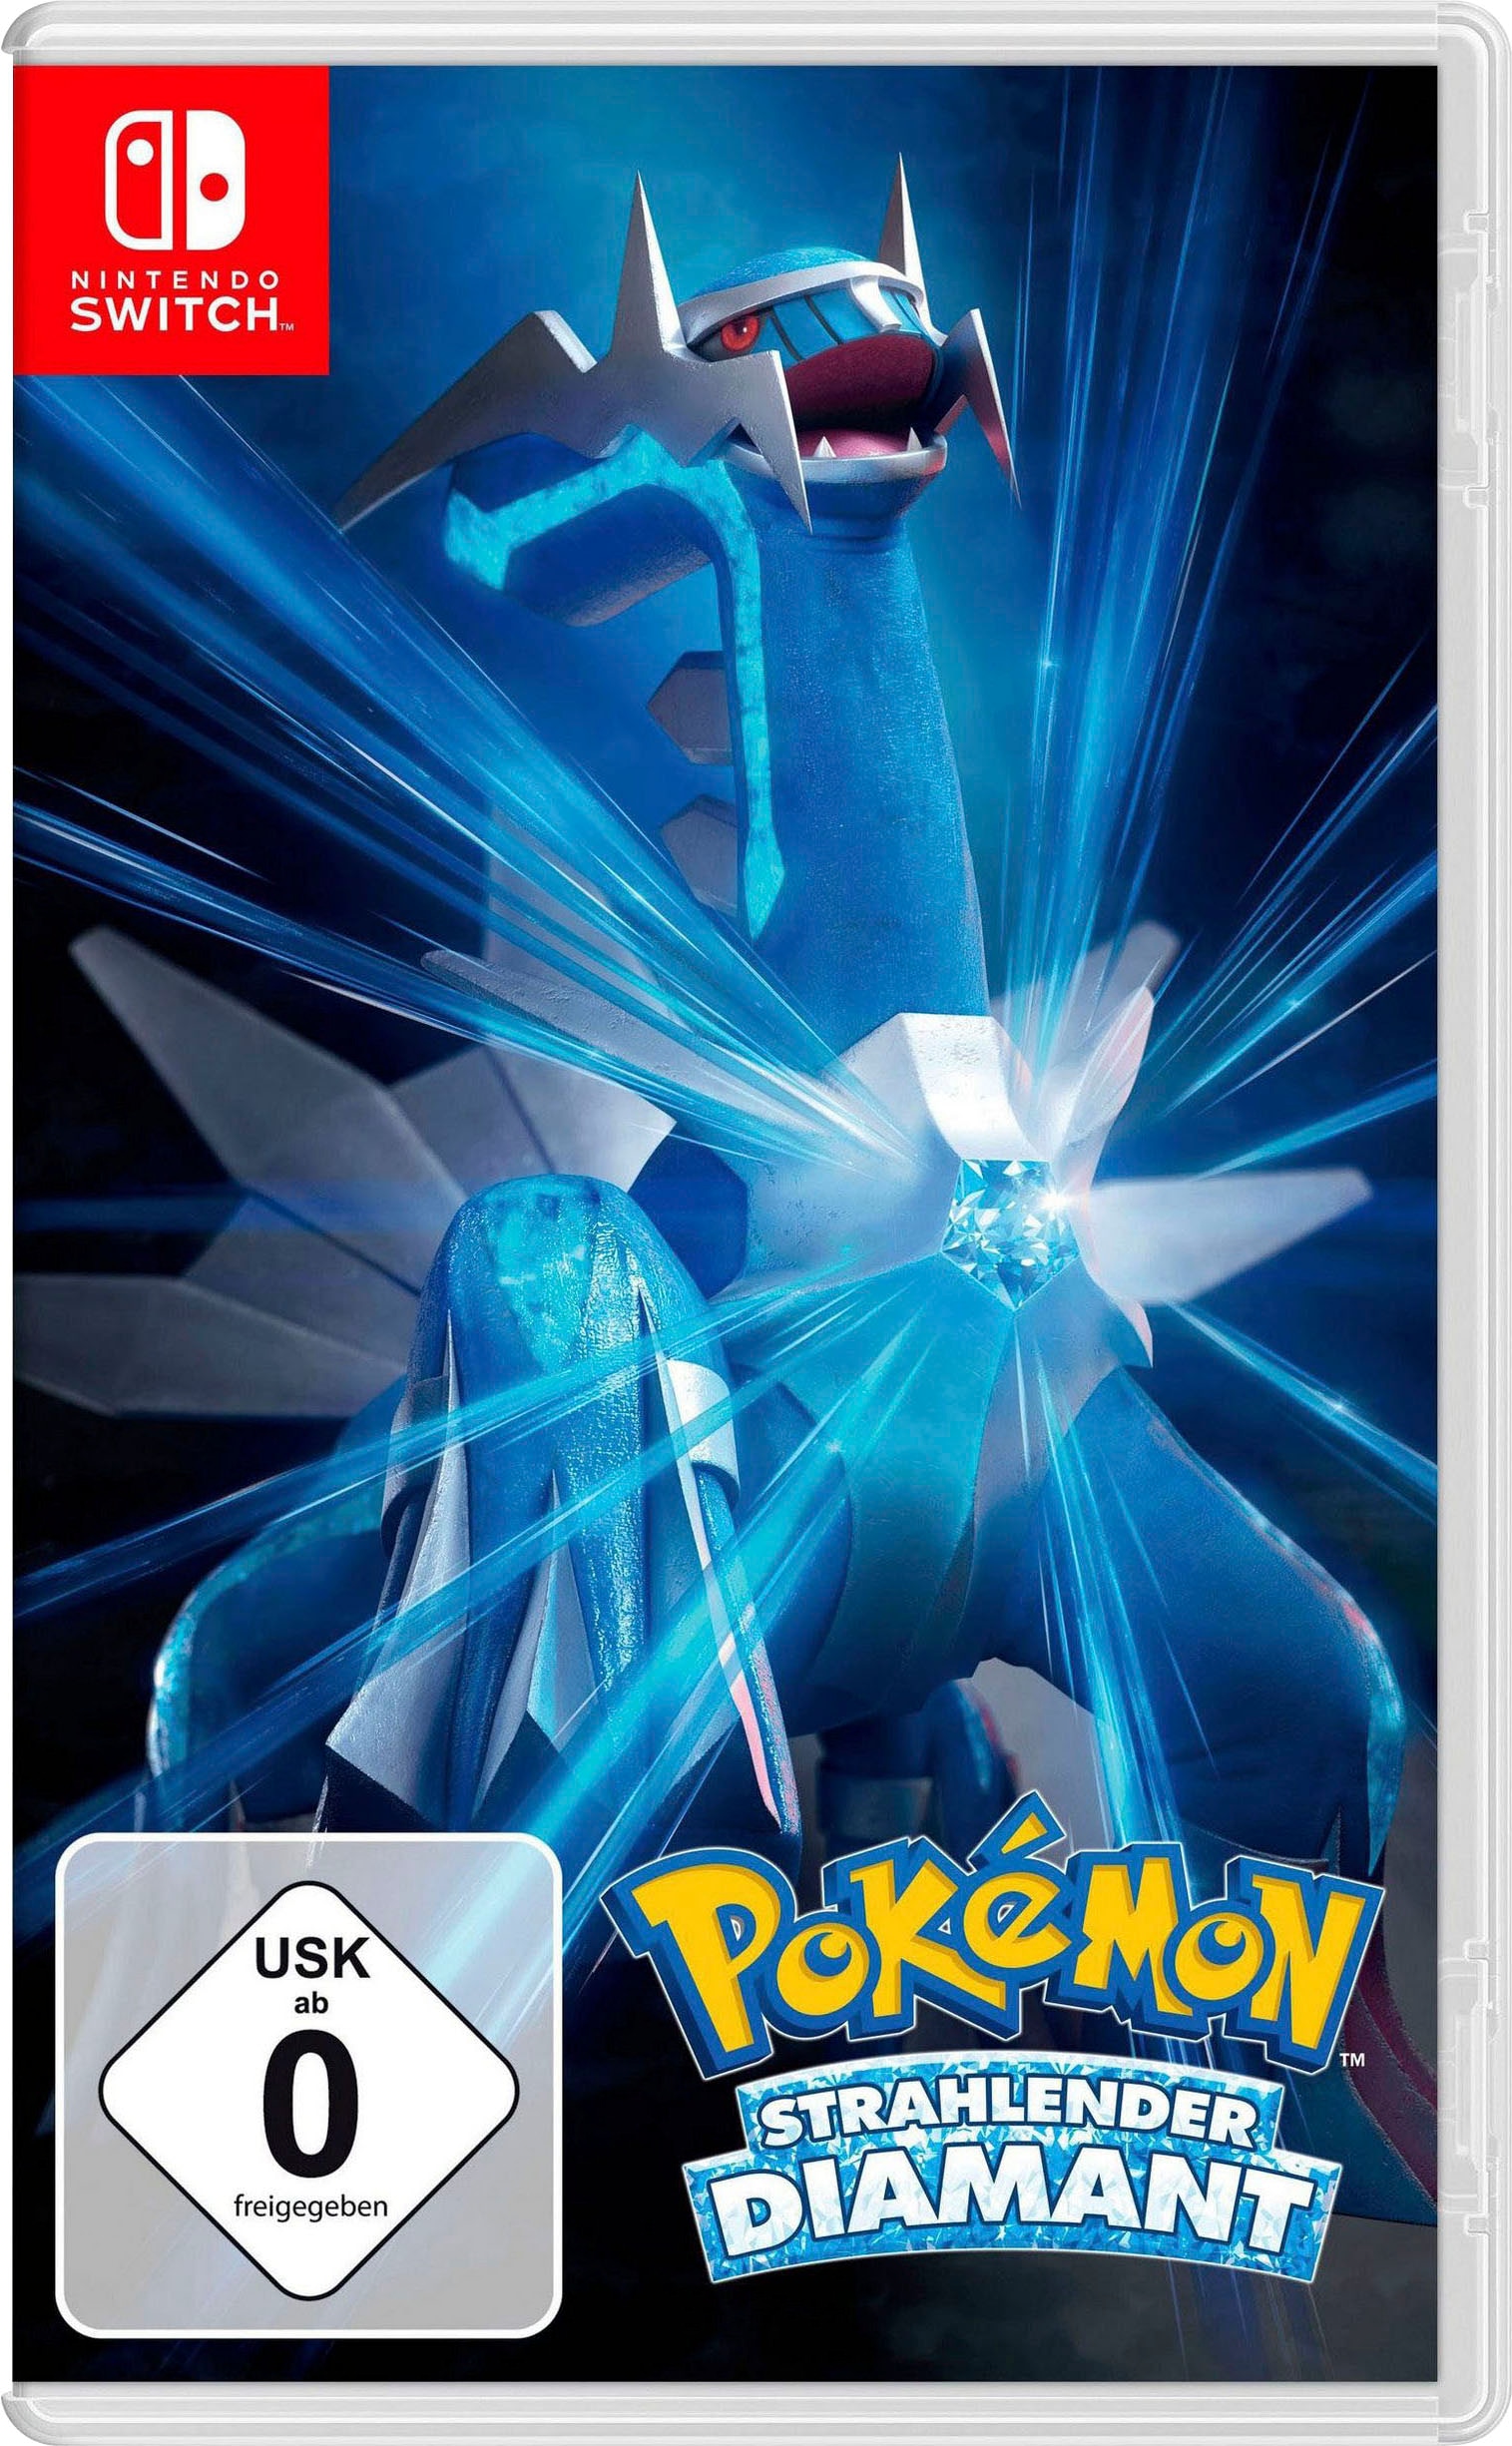 Nintendo Switch Strahlender inkl. OTTO Spielekonsole, im Pokémon Shop OLED-Modell Diamant Online